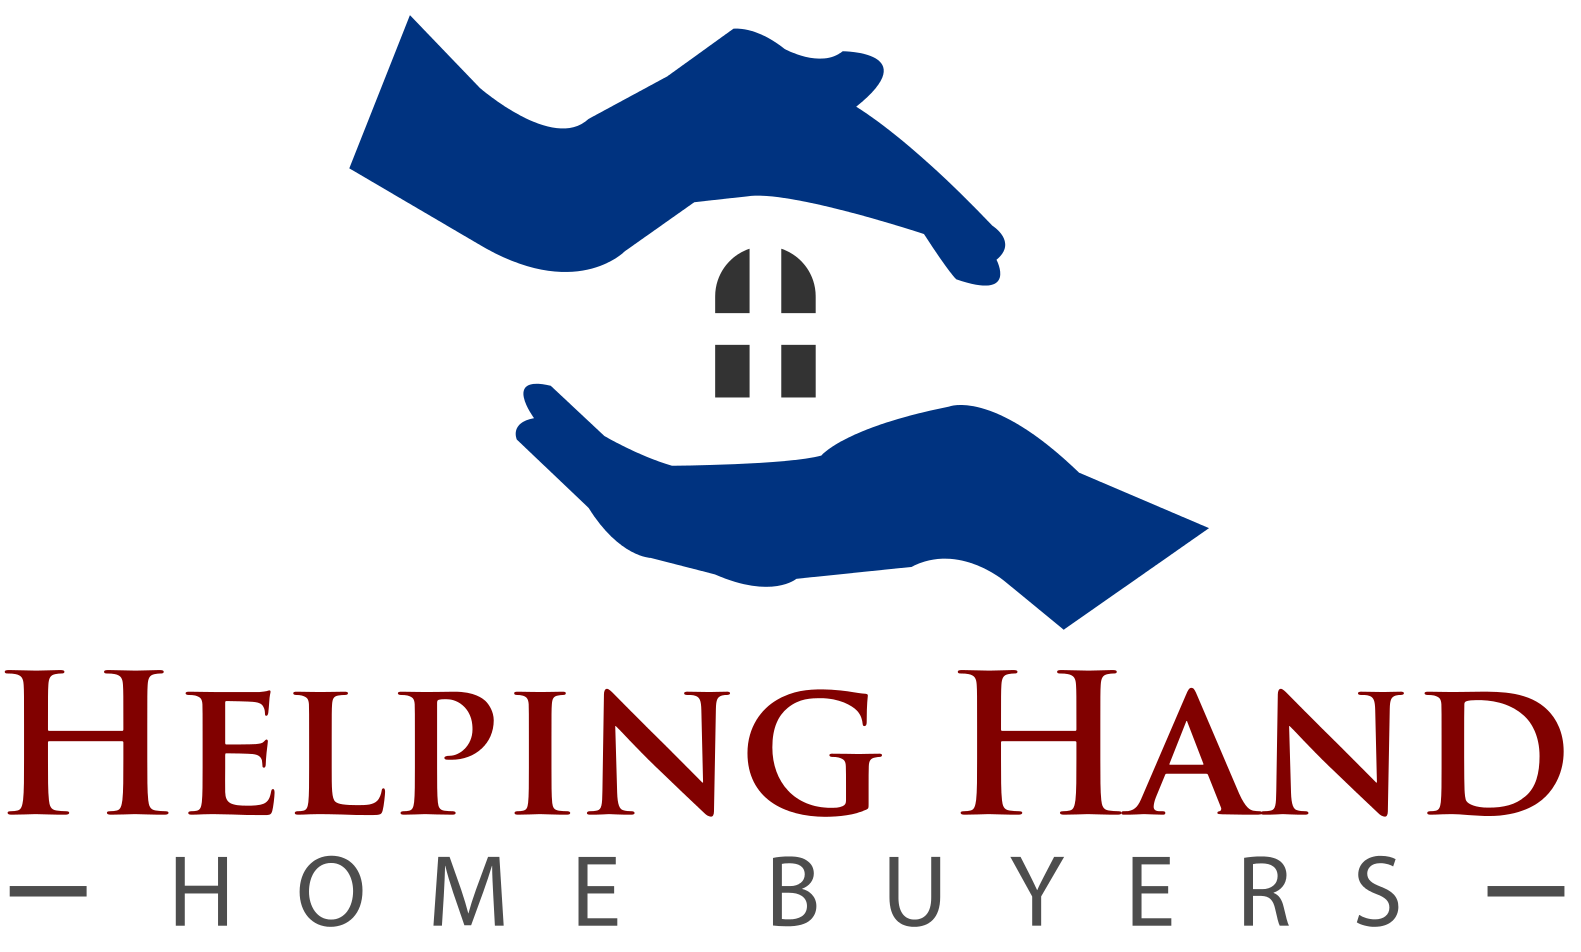 Helping Hand Home Buyers Logo